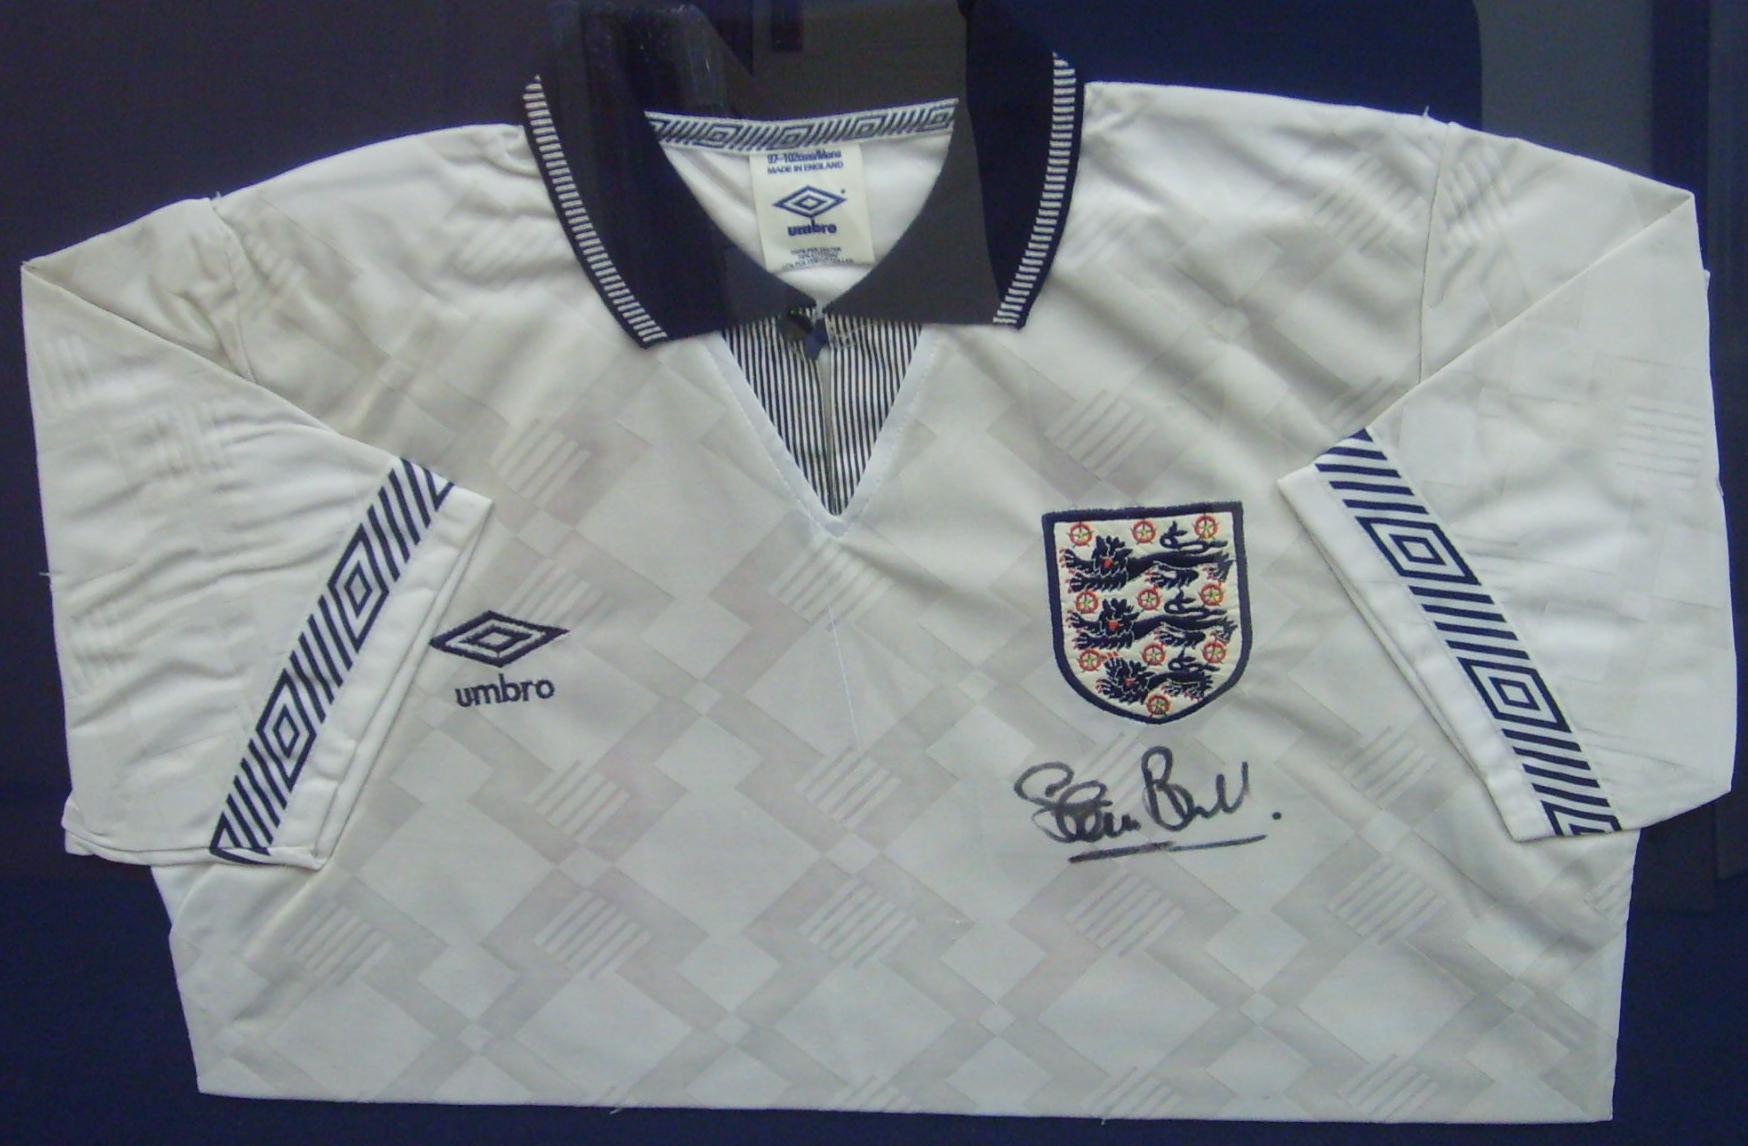 ******Steve Bull worn England shirt